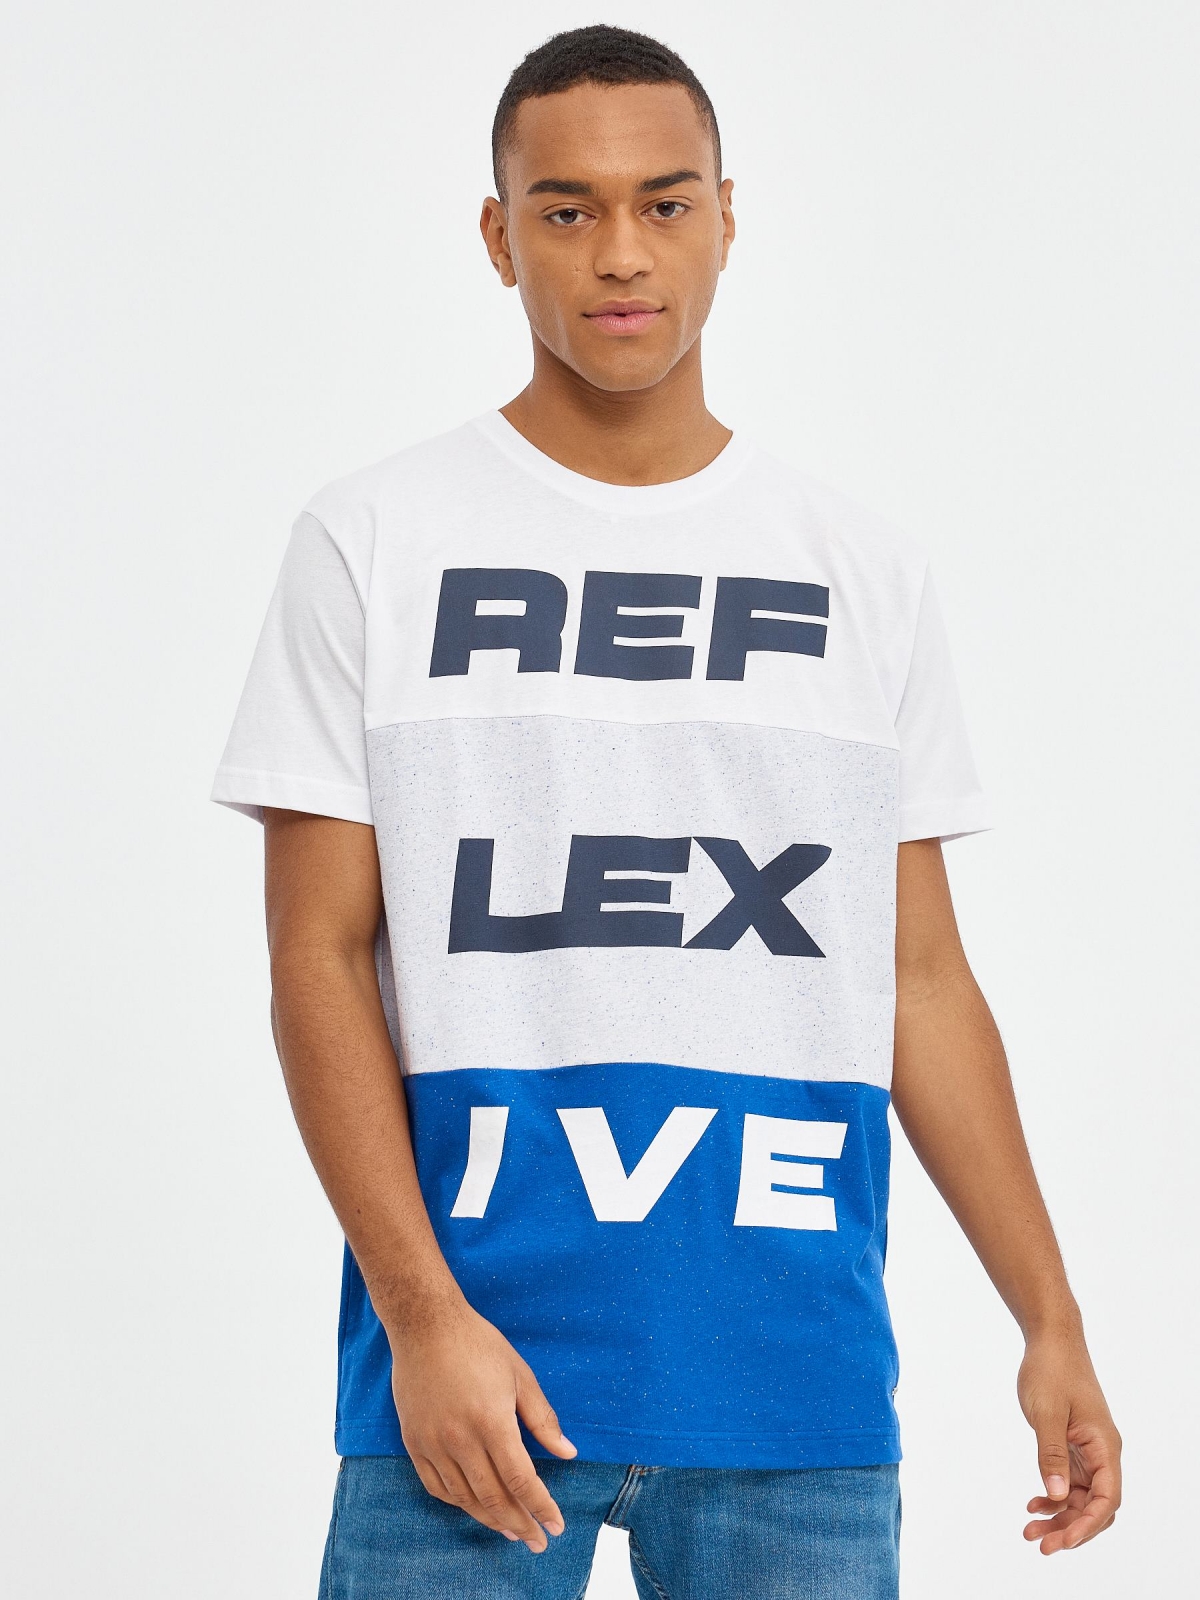 REF LEX IVE T-shirt blue middle front view